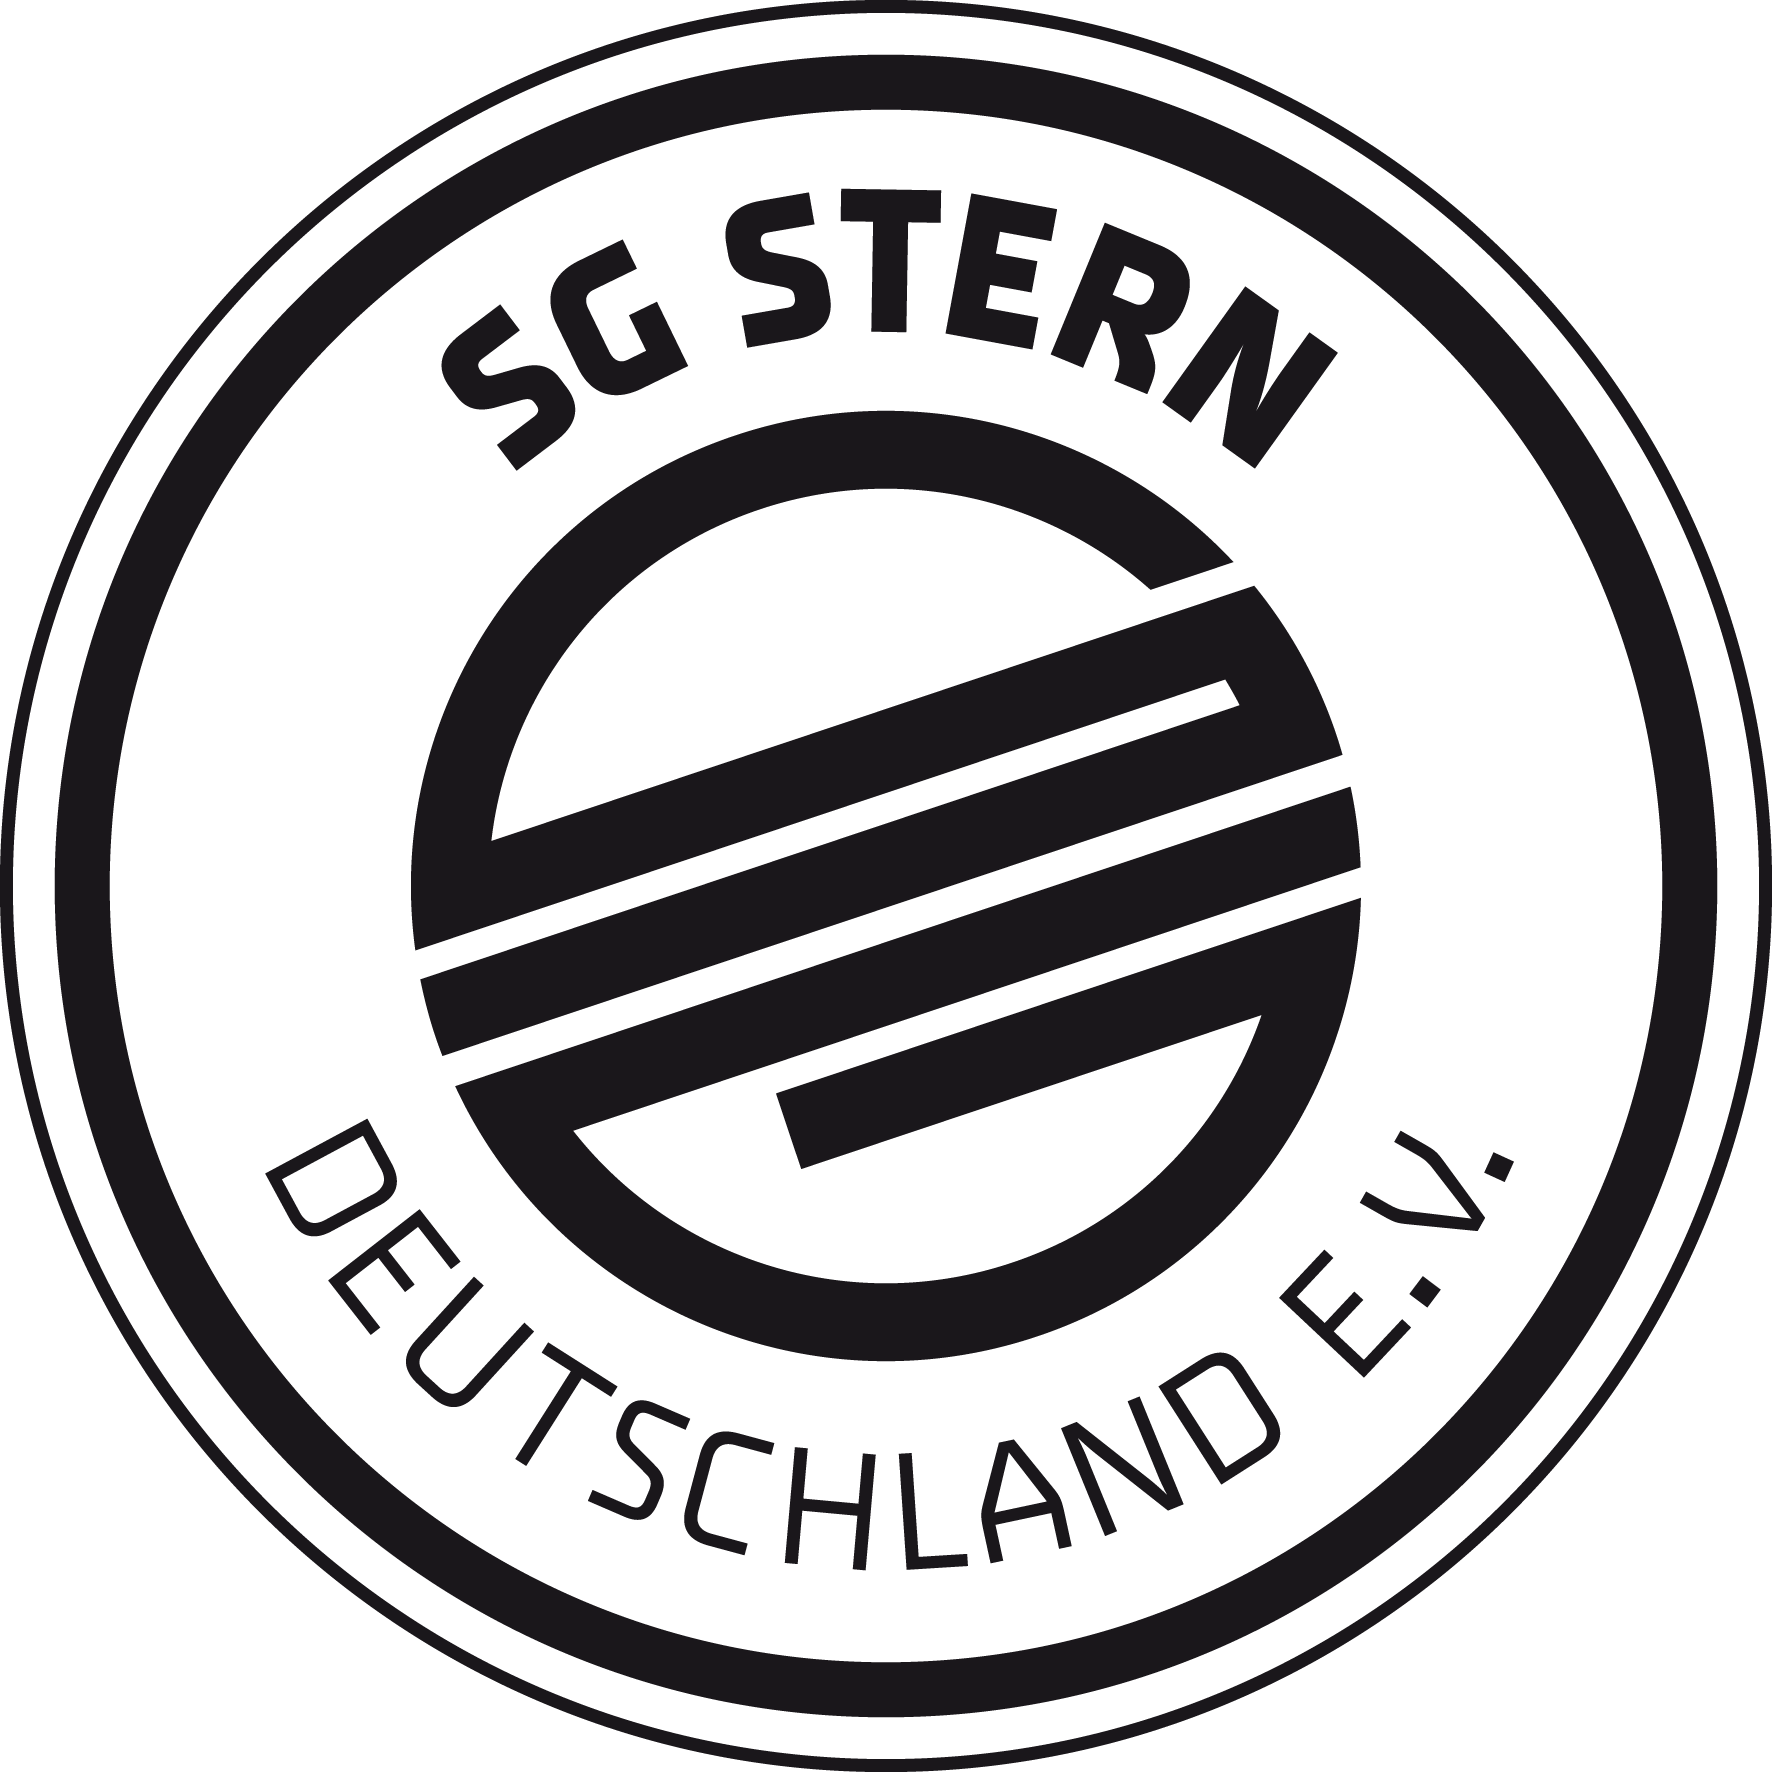  SG Stern Deutschland e.V. Logo